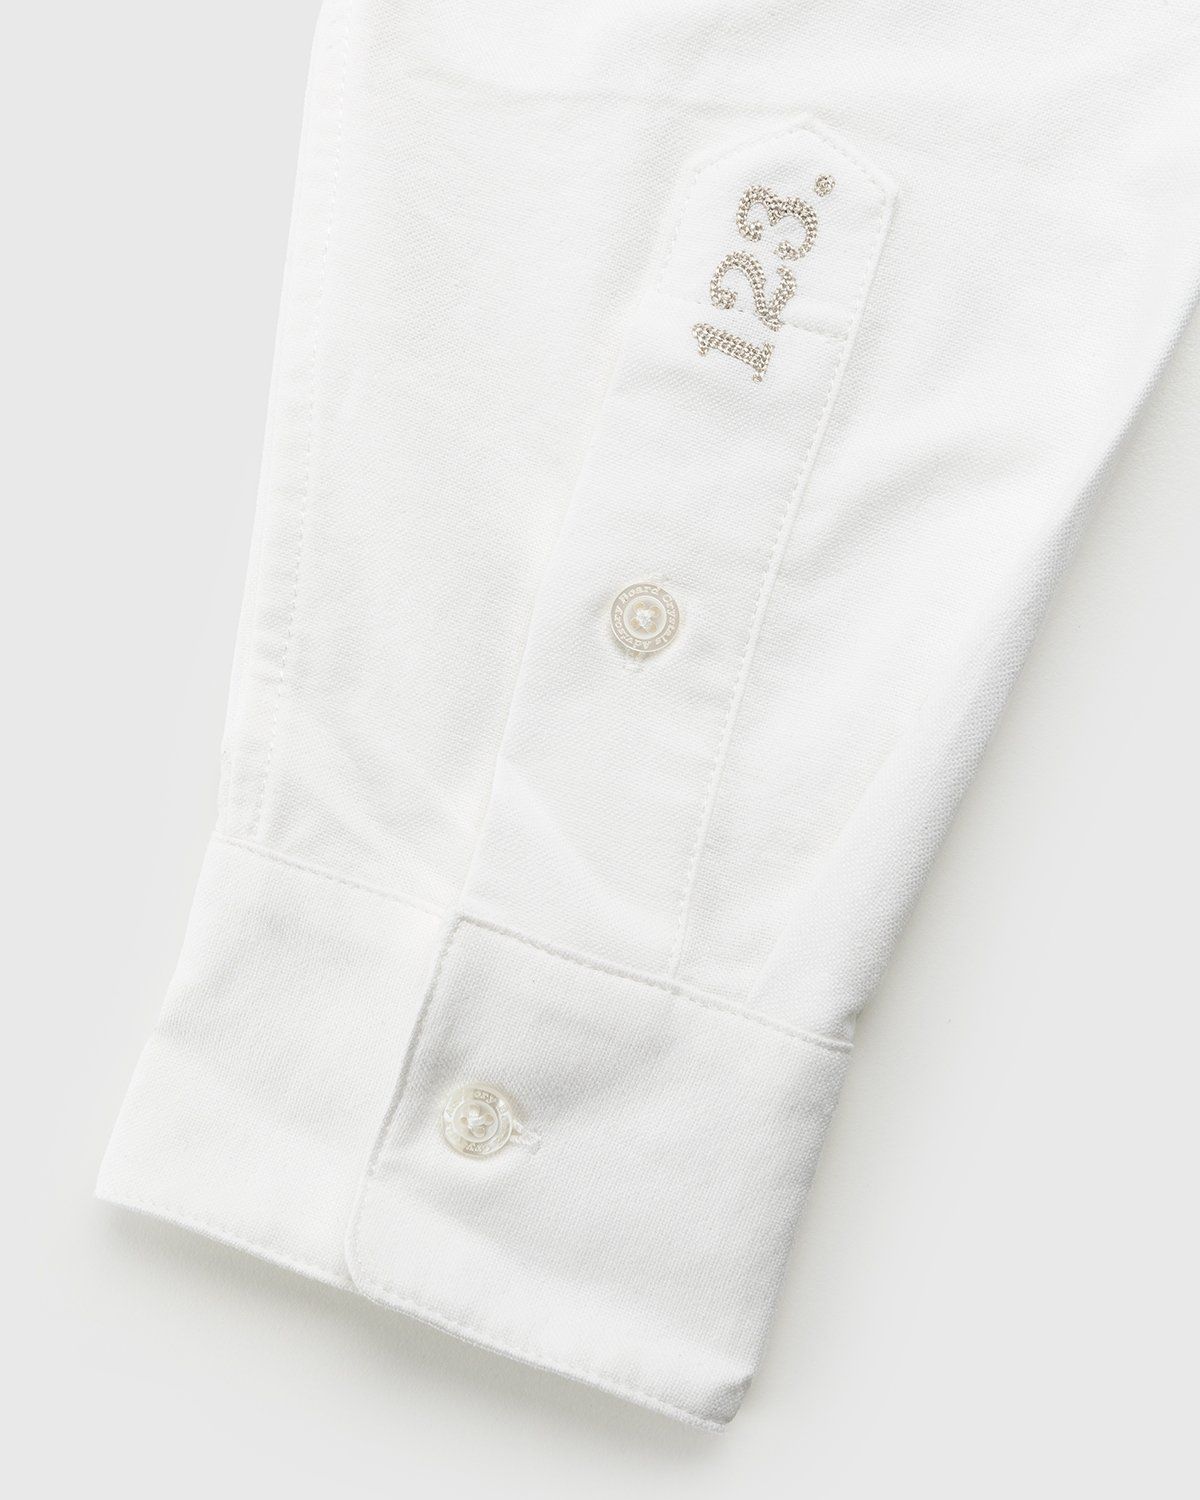 Abc. – Oxford Woven Shirt Selenite - Longsleeve Shirts - White - Image 4